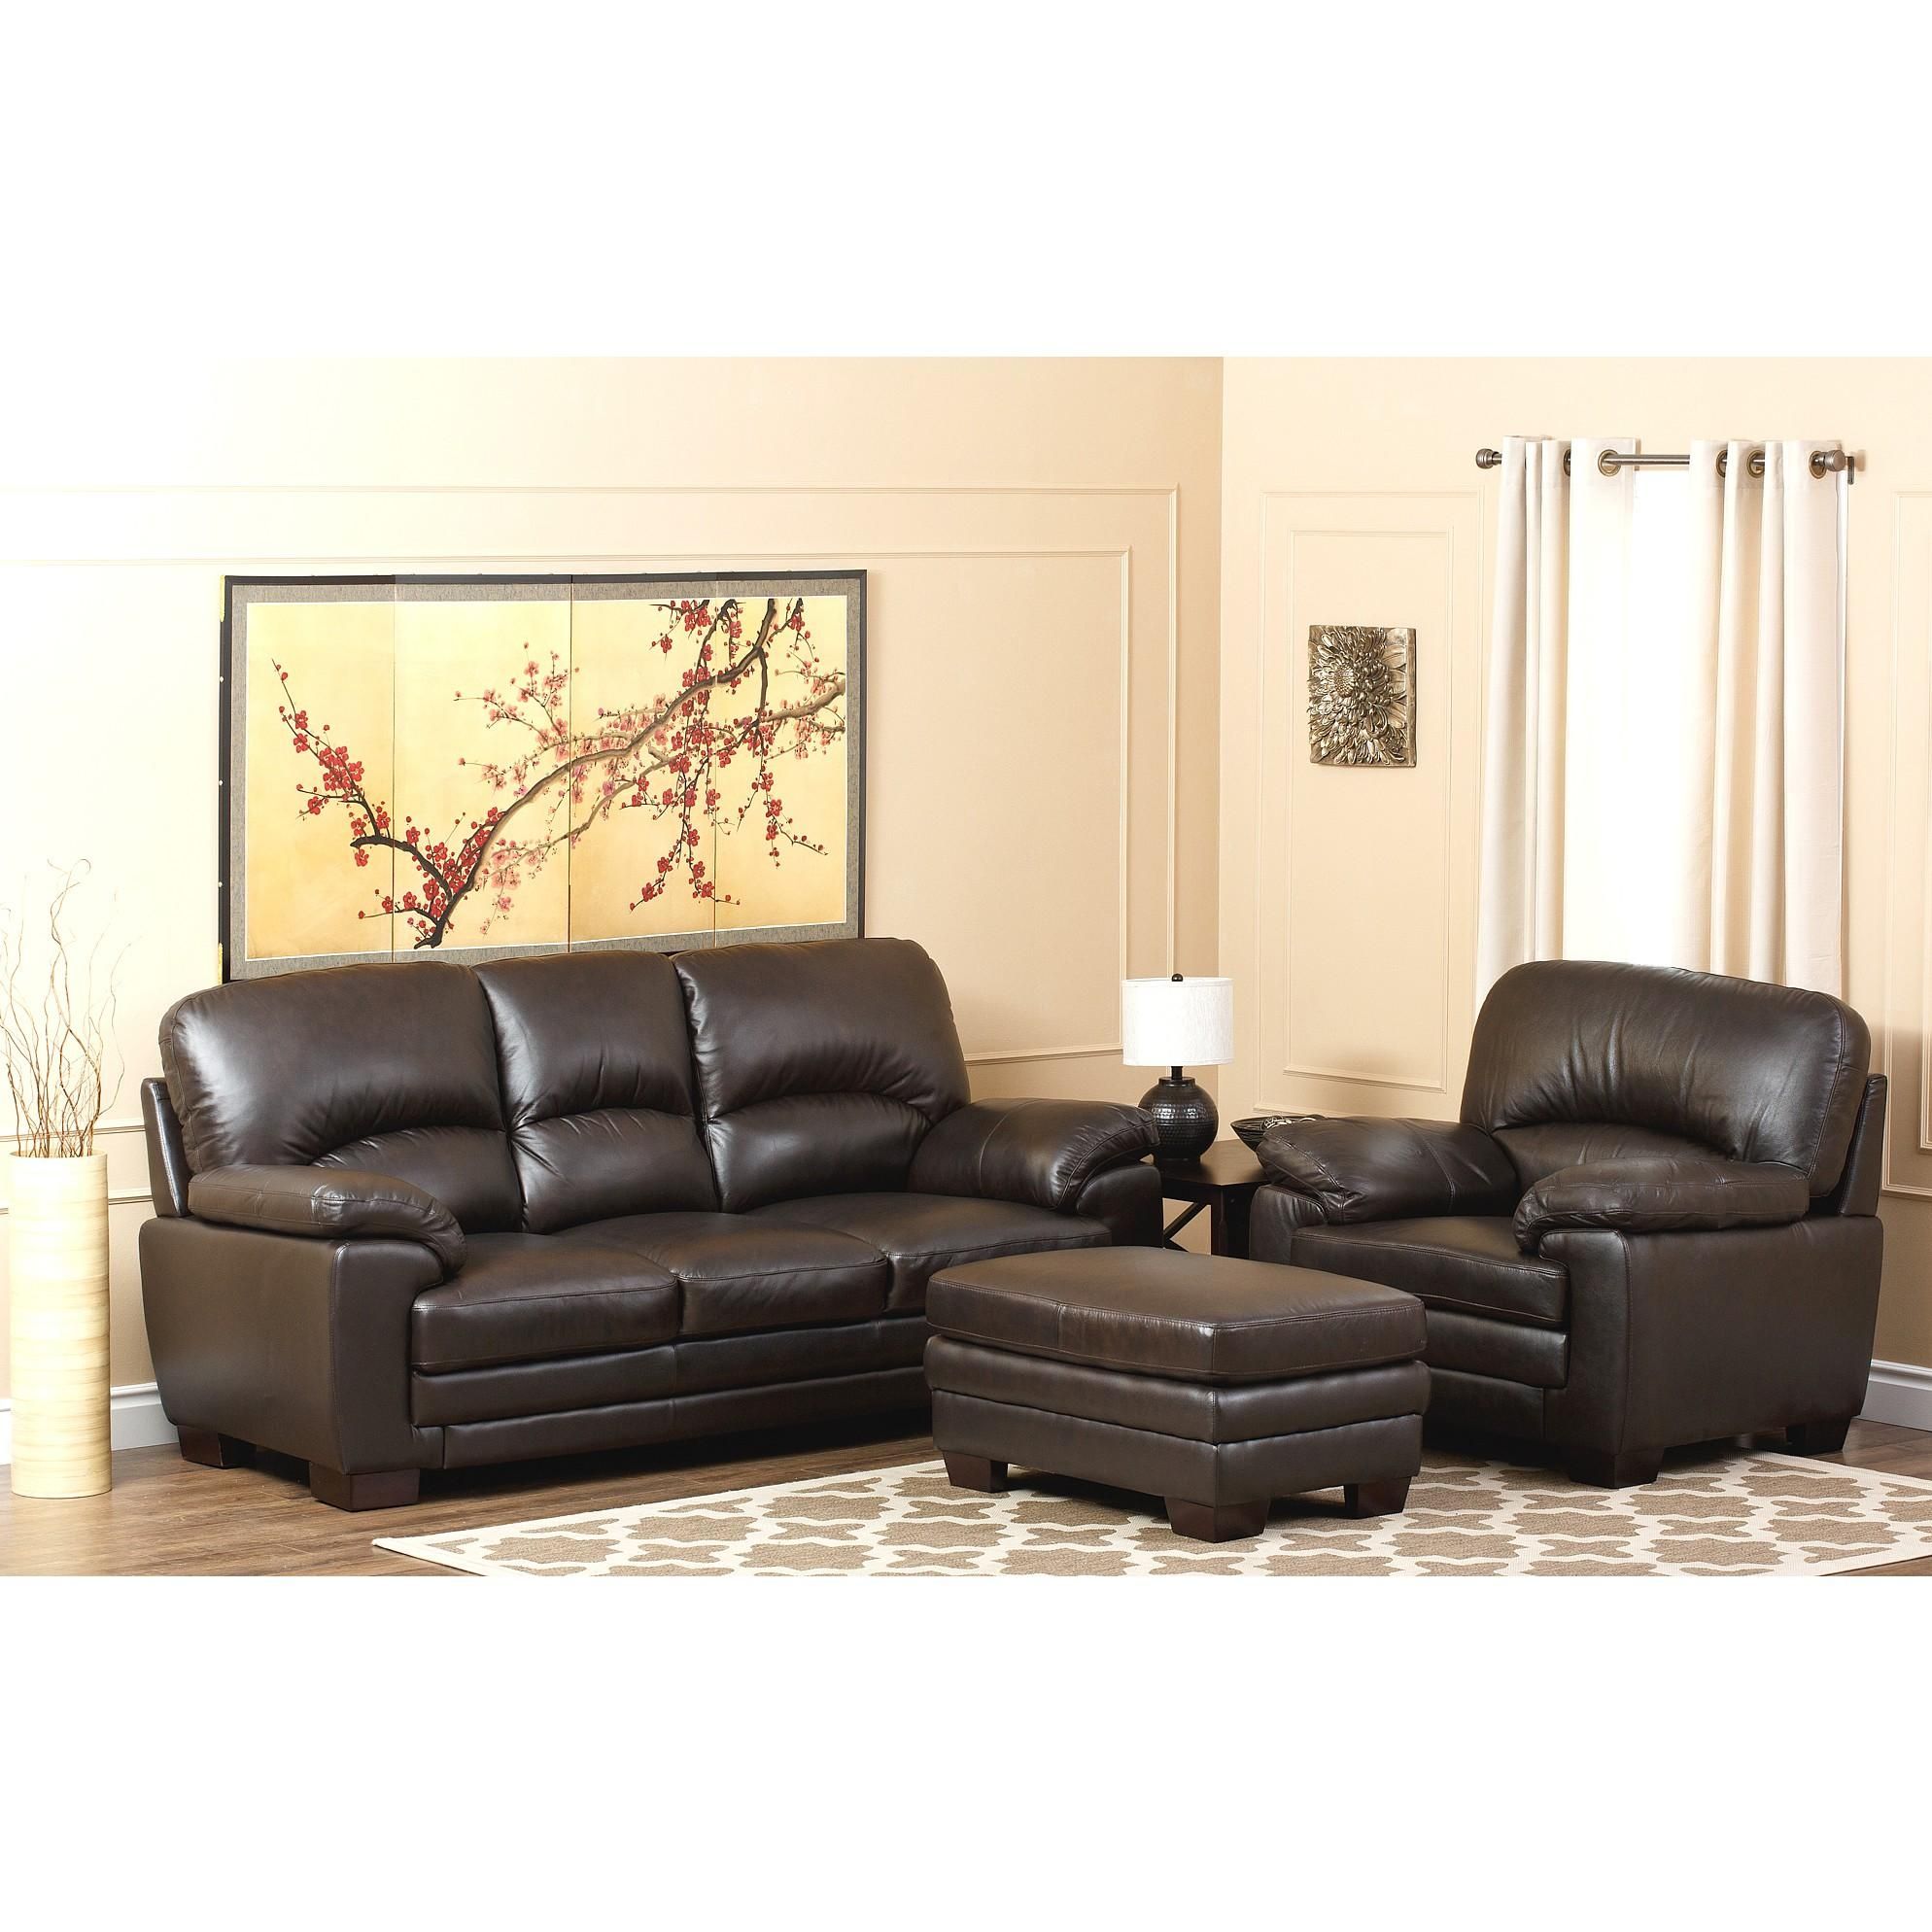 Sofa : Leather Sofas Orange County Excellent Home Design With Regard To Sofa Orange County (View 12 of 20)